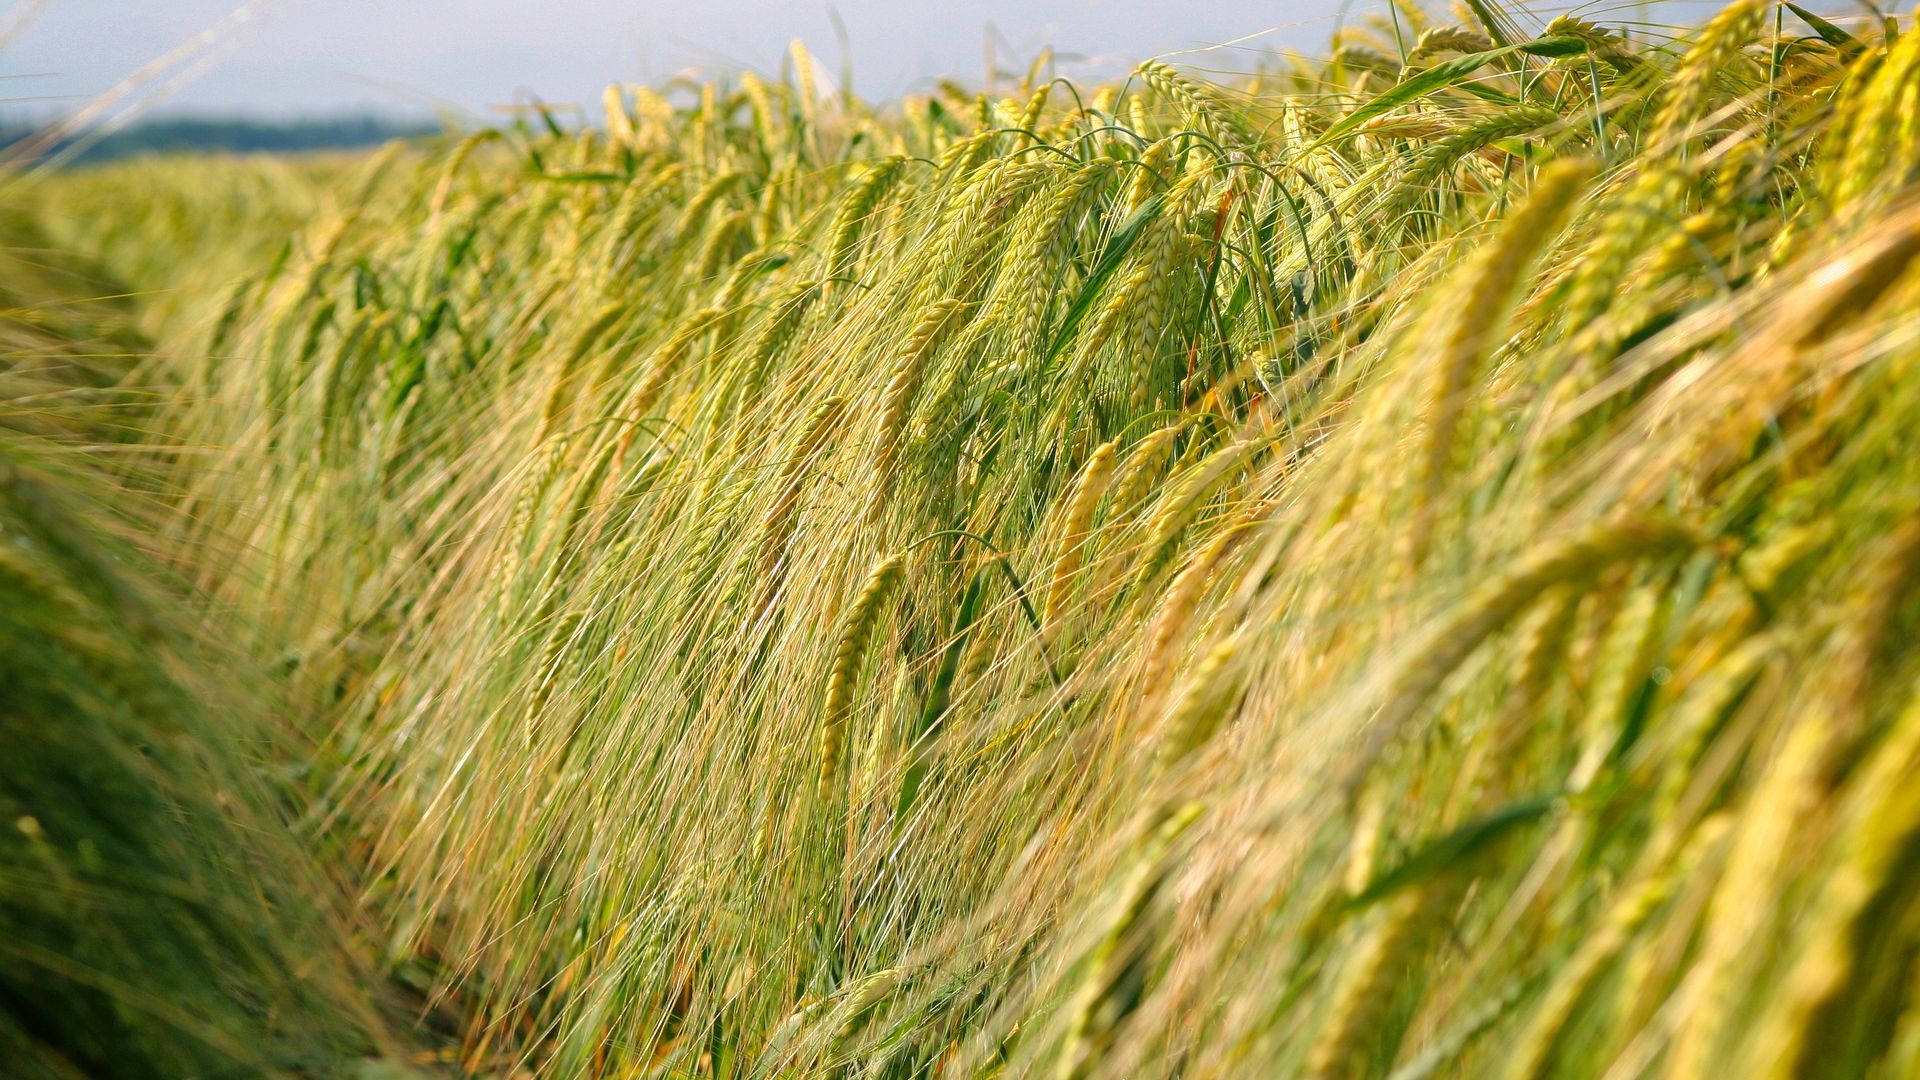 Wallpaper Cereal crops, grass threads